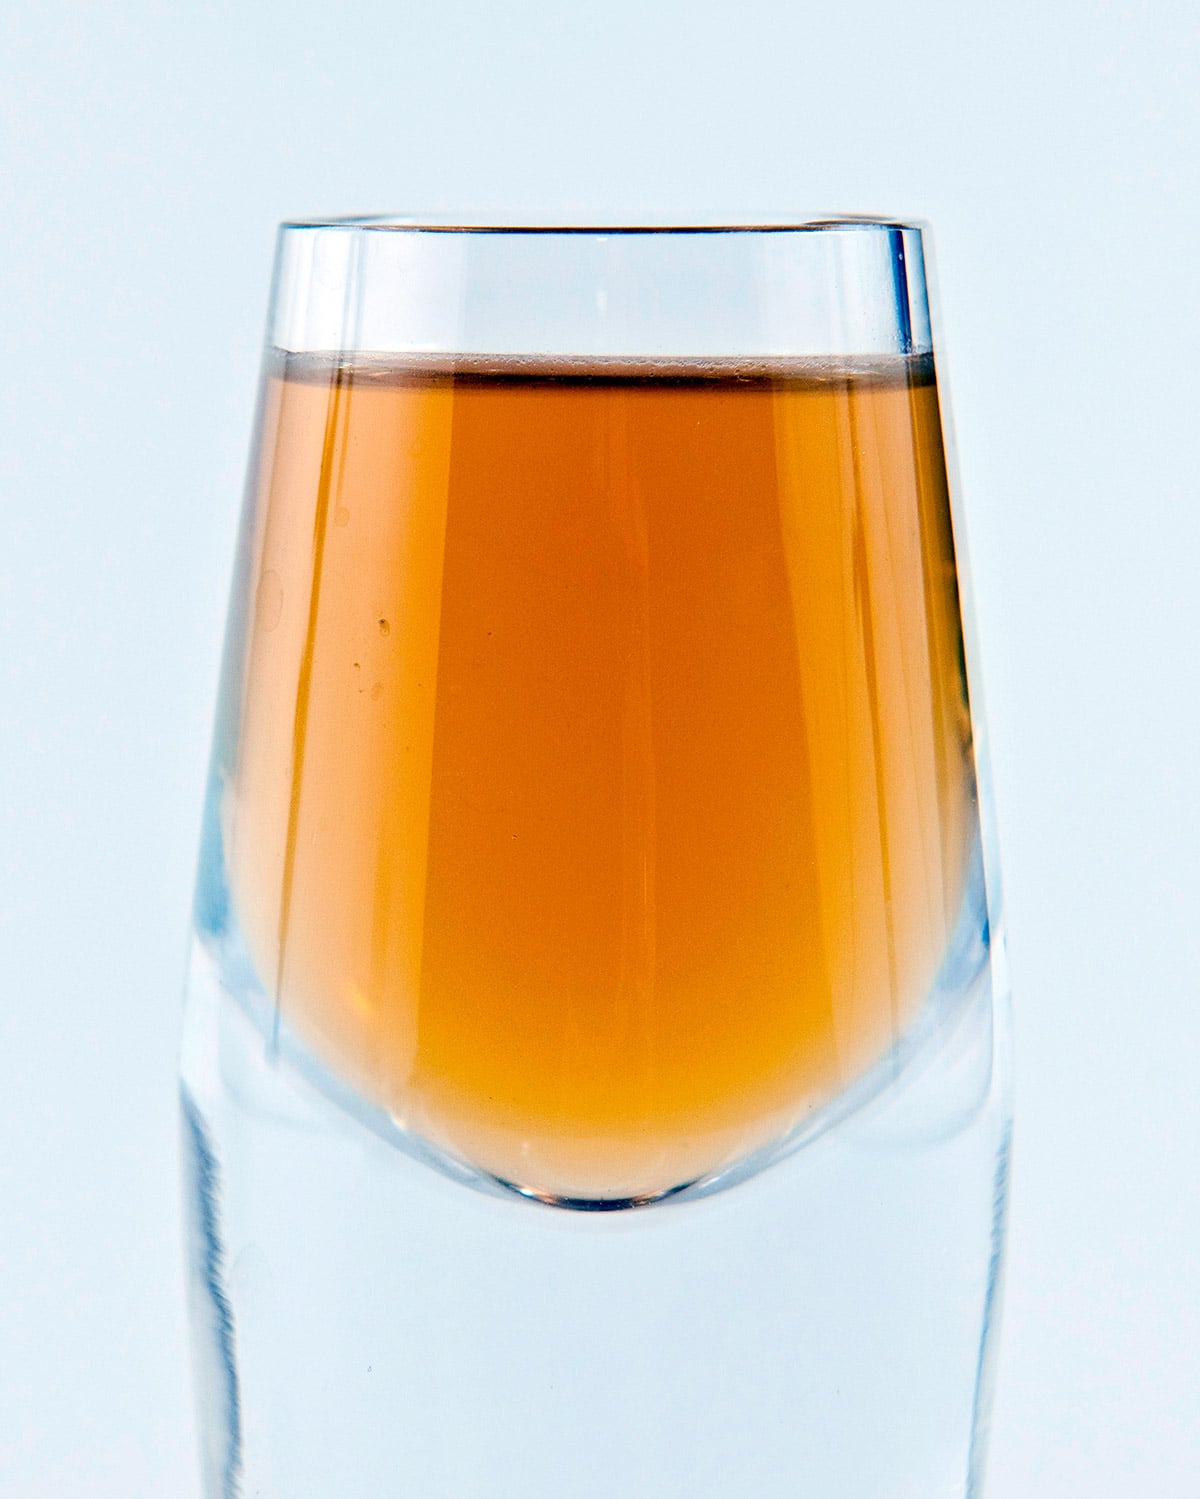 A glass of consommé